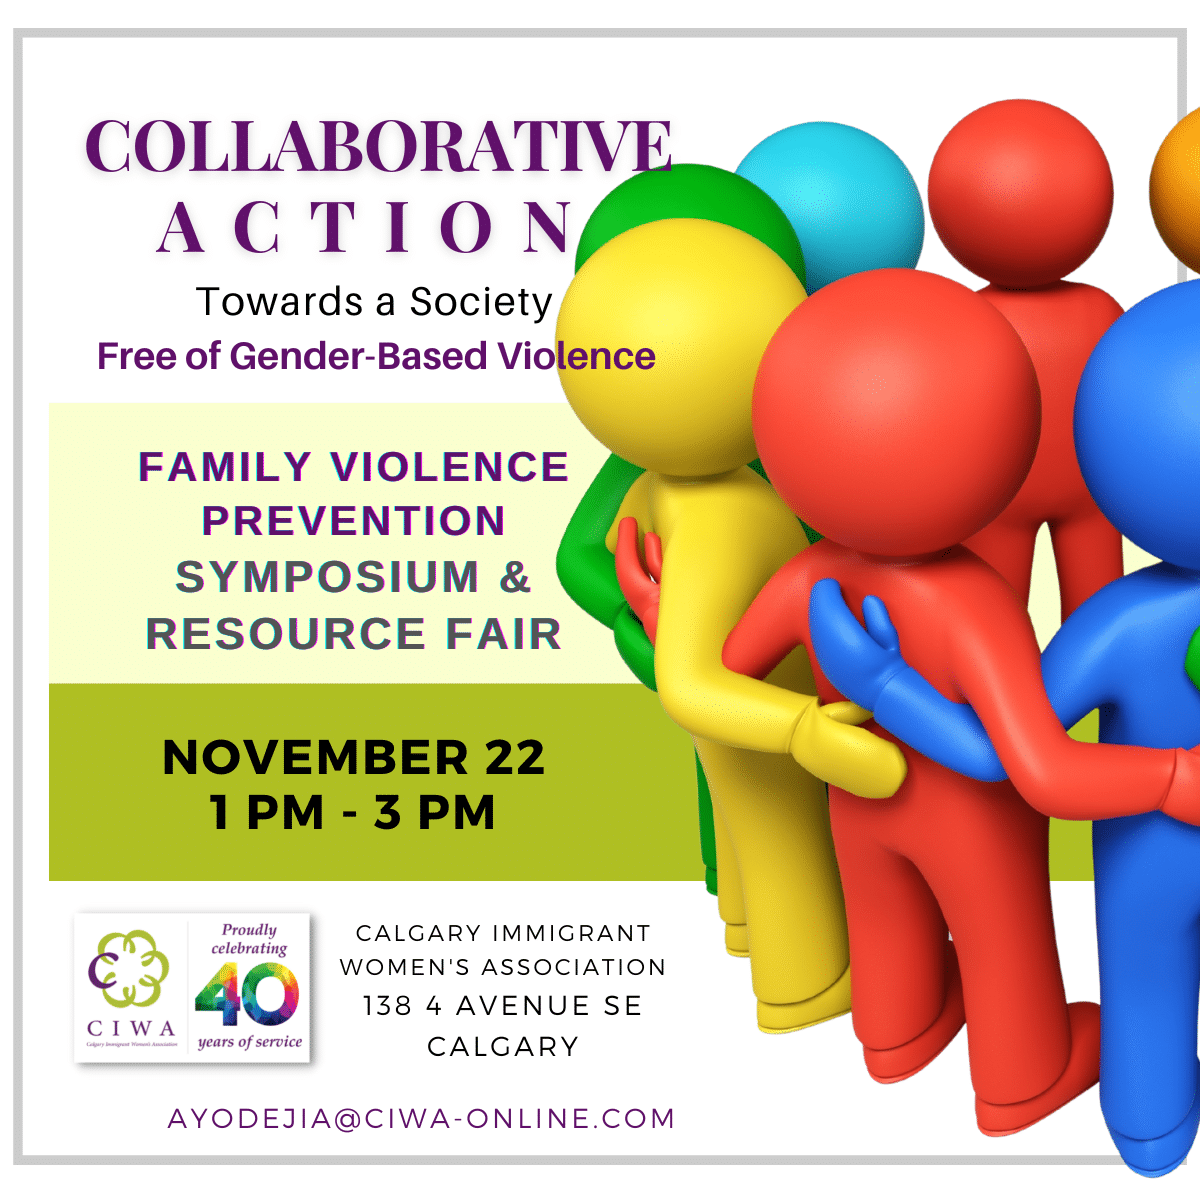 Family Violence Prevention Symposium & Resource Fair